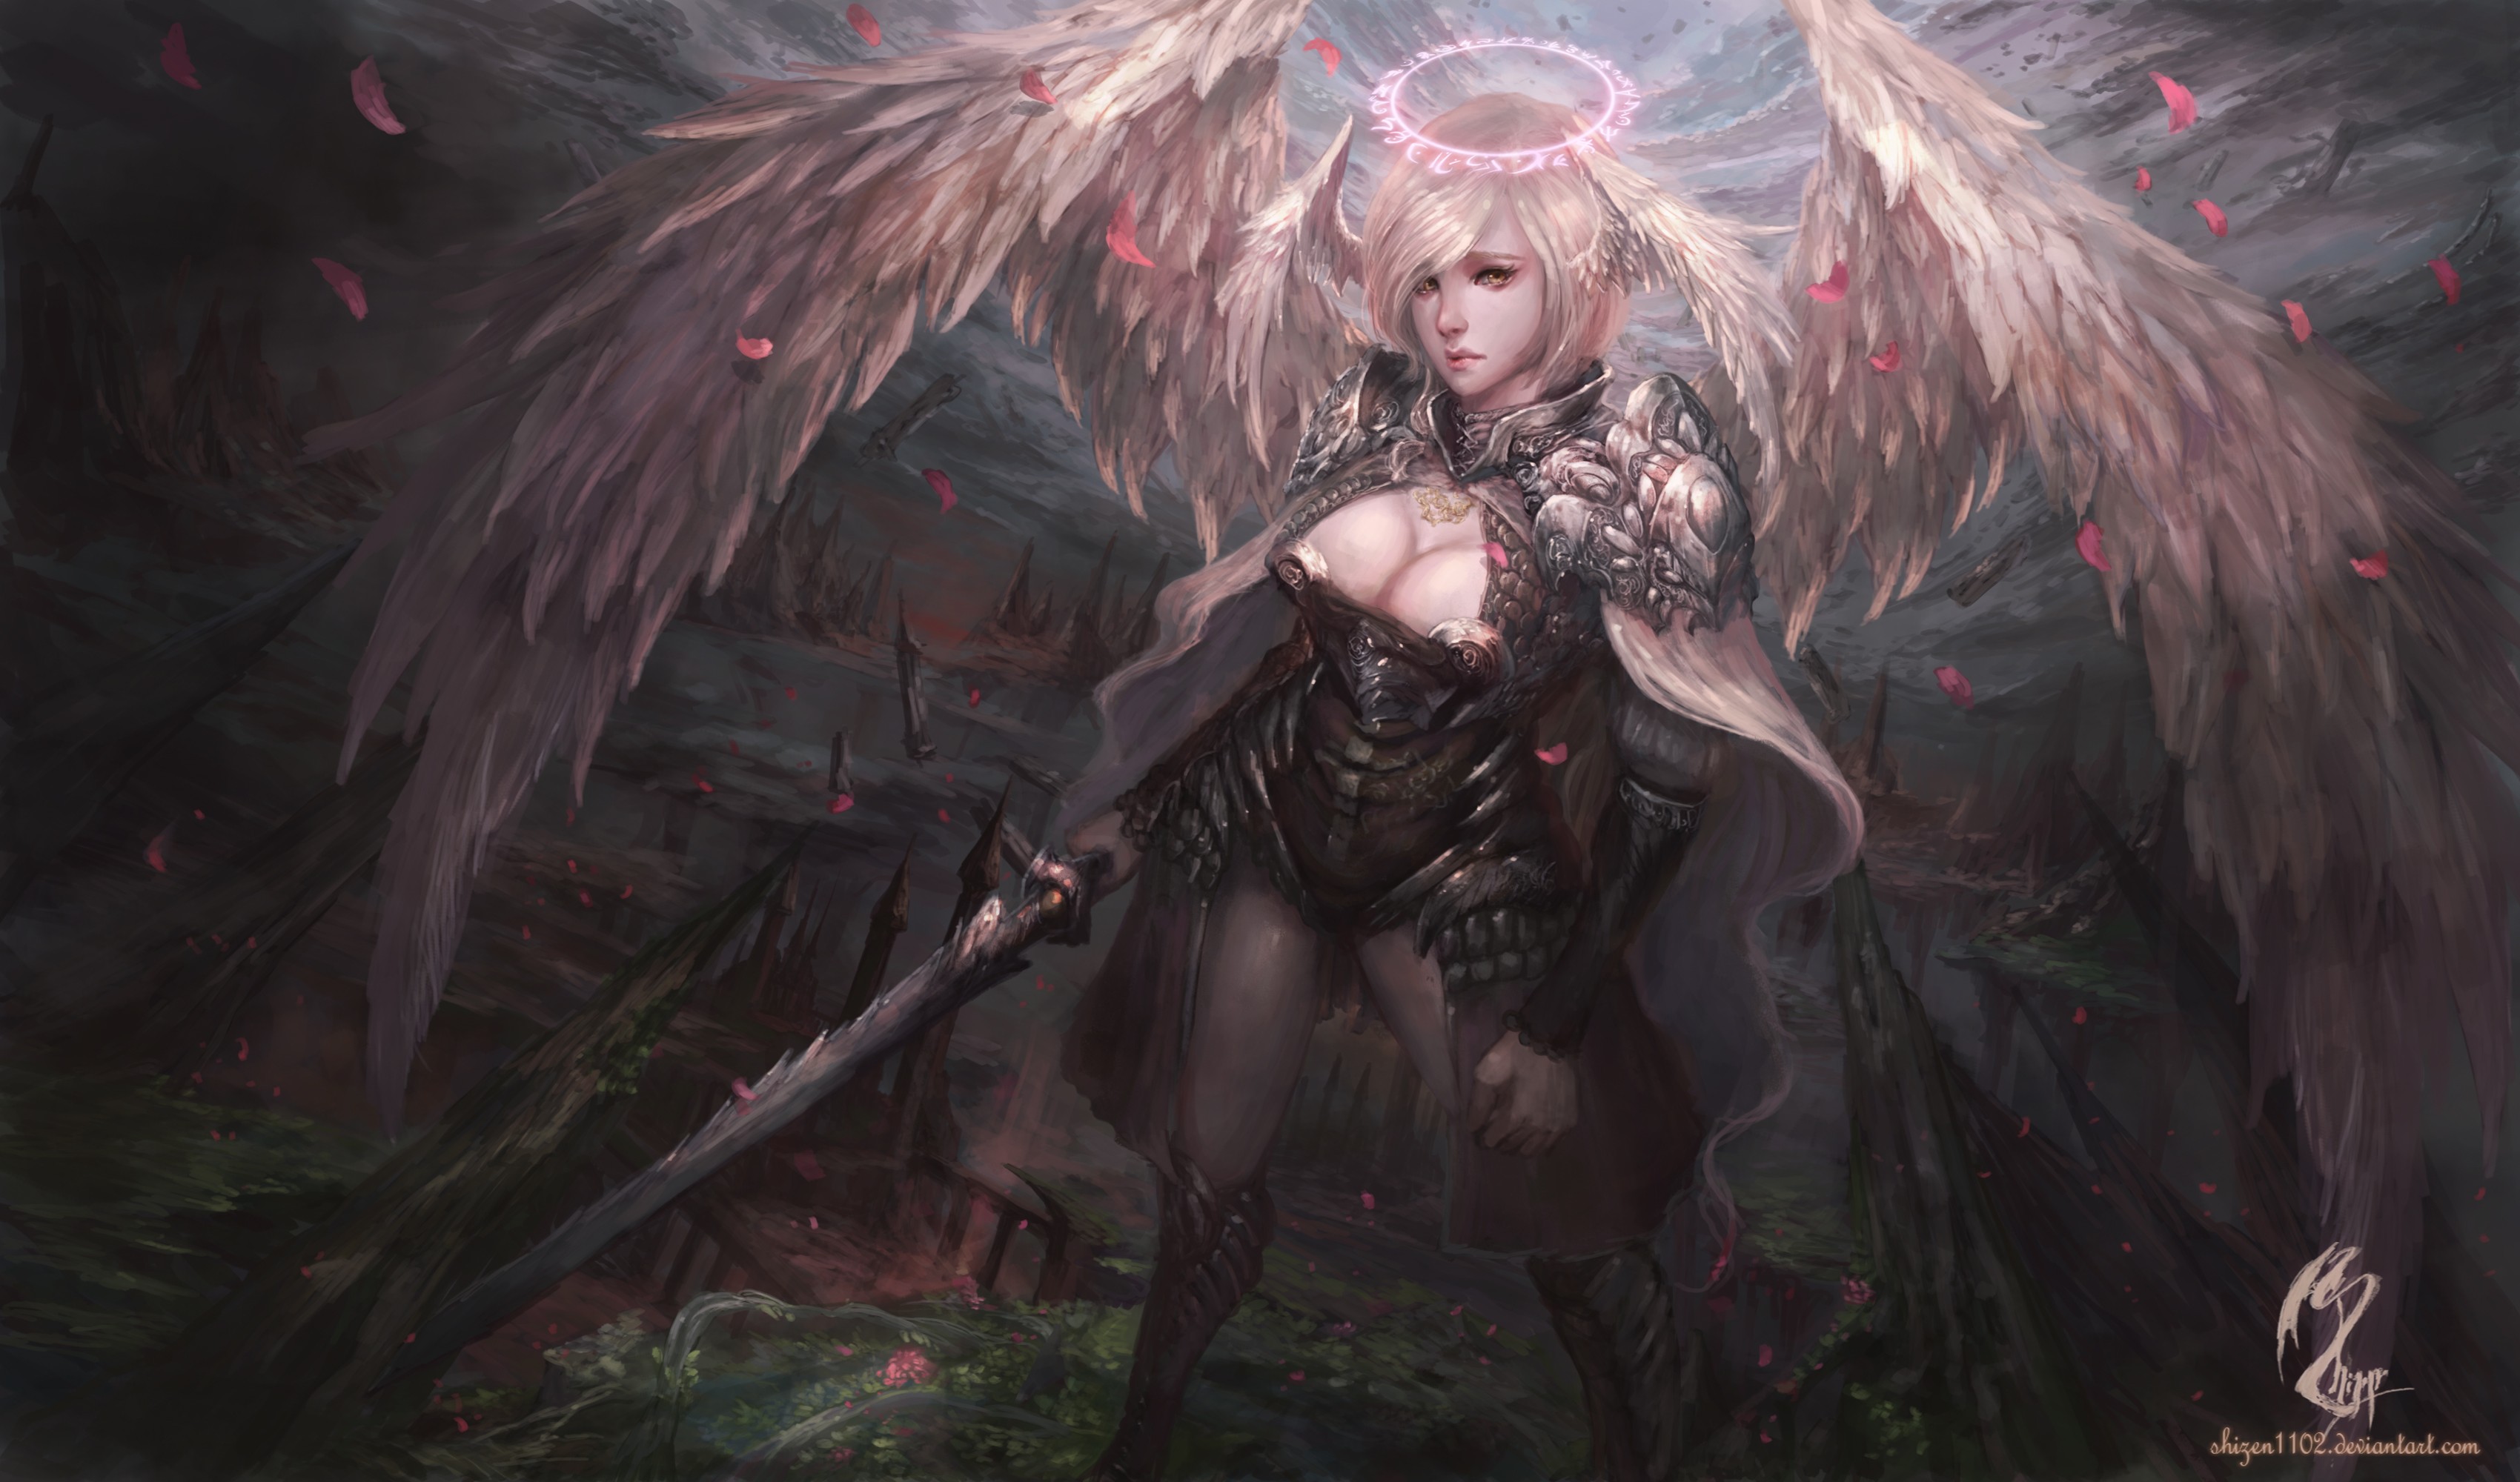 General 3400x2000 fantasy art angel sword artwork warrior women boobs women with swords fantasy girl